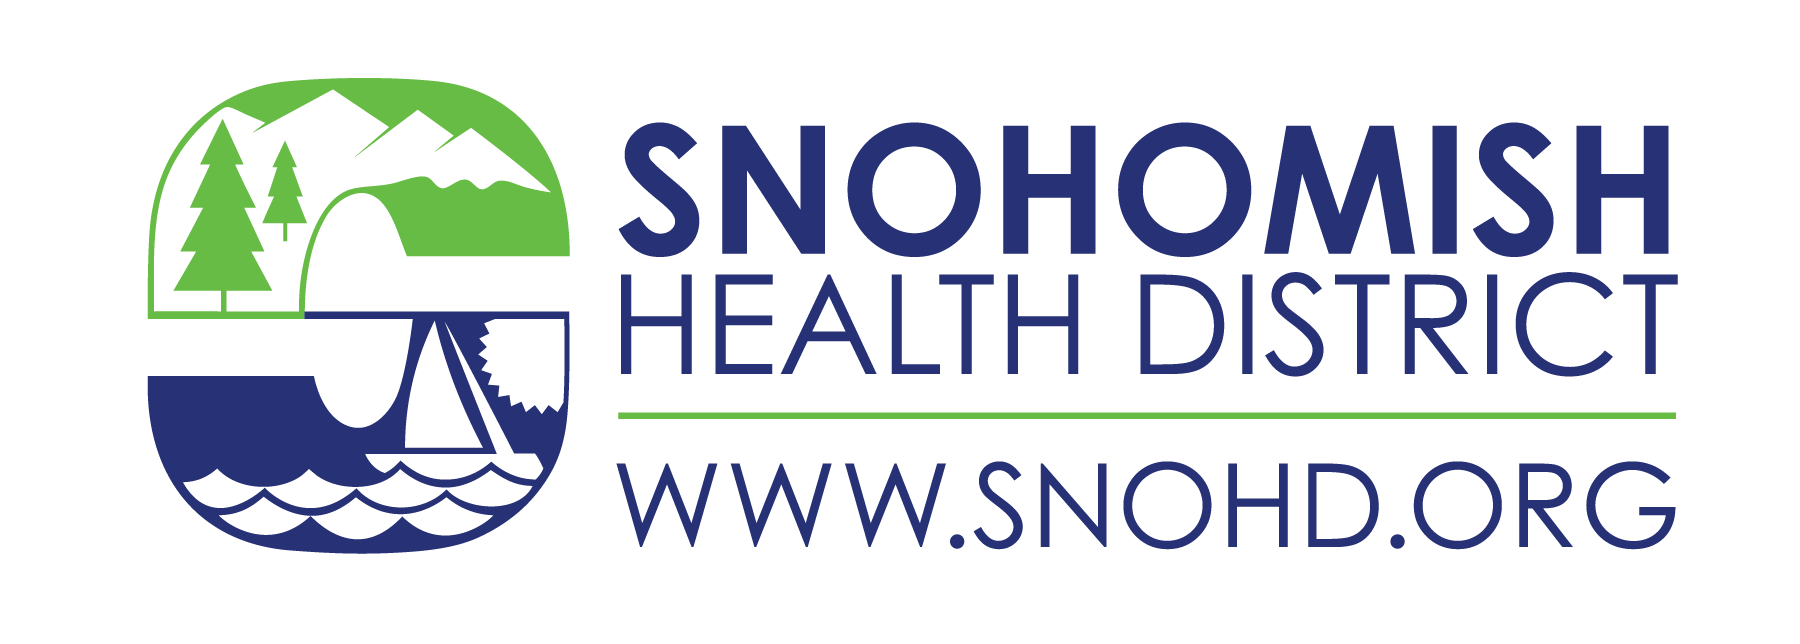 Snohomish Health District Testing Site - Longfellow Building - Symptoms Logo